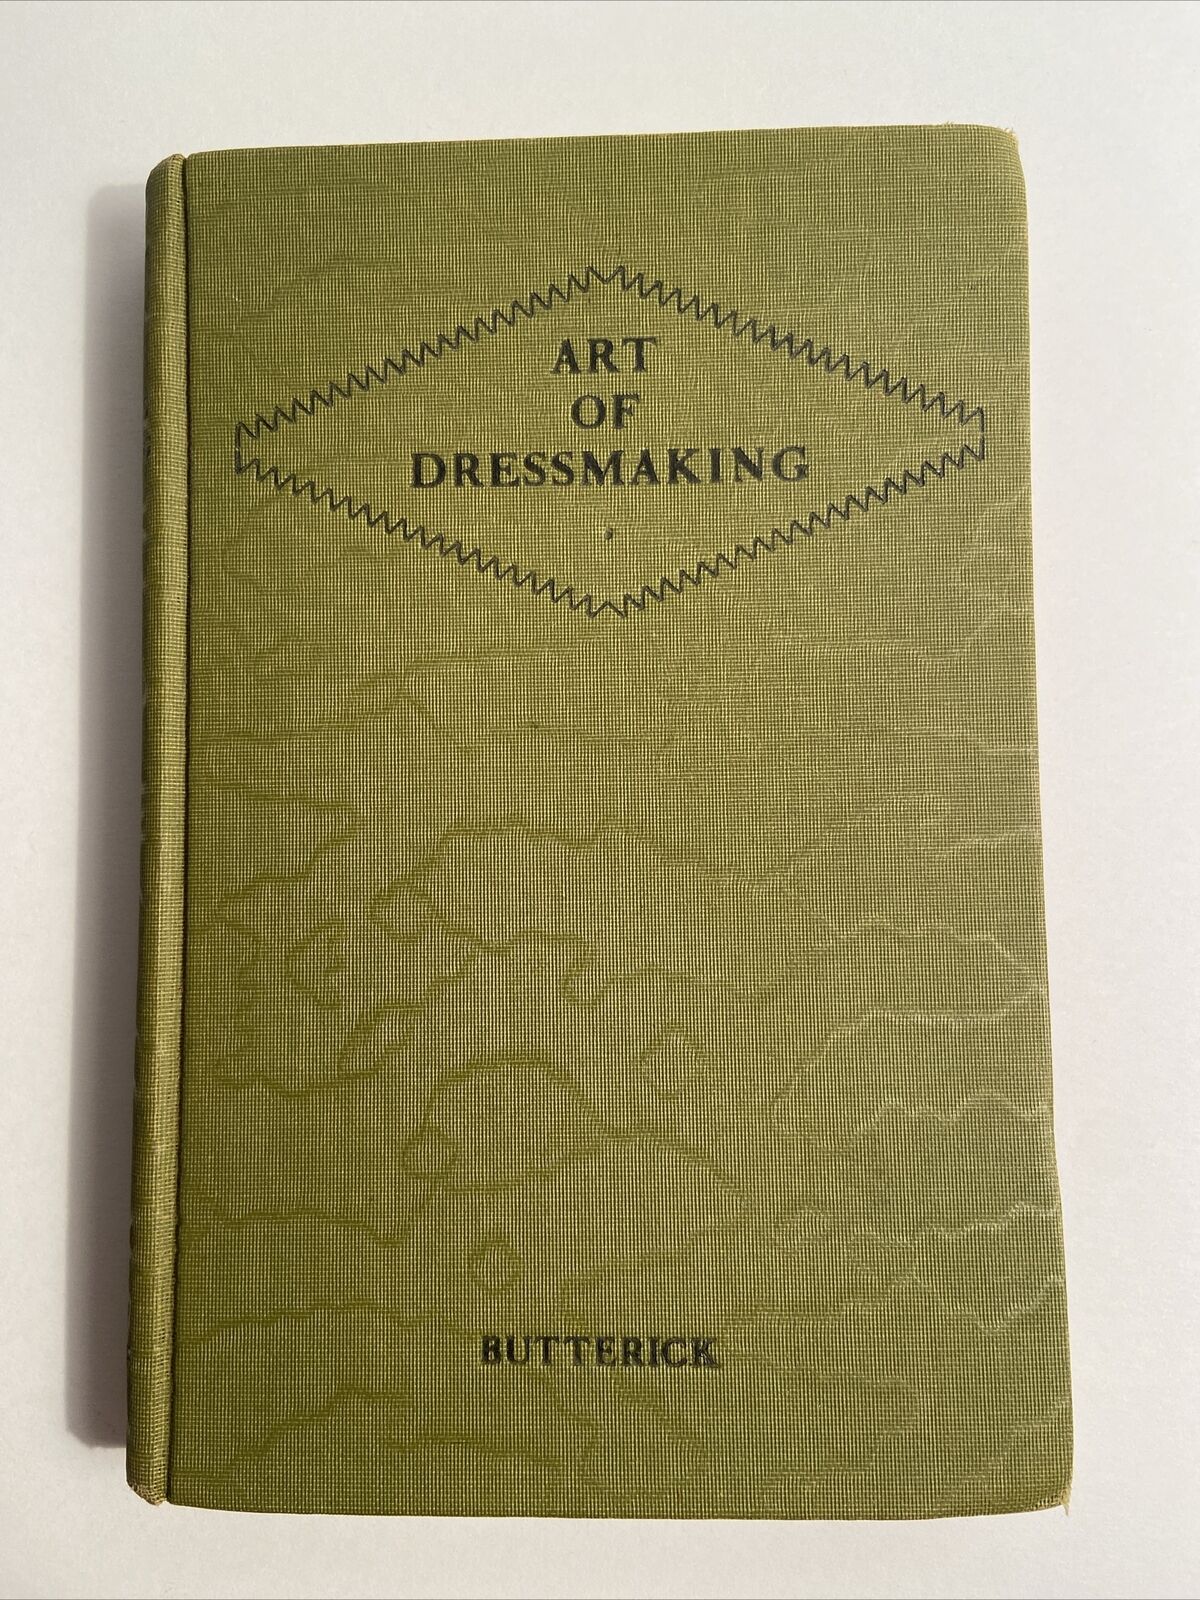 VTG 1920’s Flapper Dress ILLUSTRATED Sewing Book THE ART OF DRESSMAKING 1927